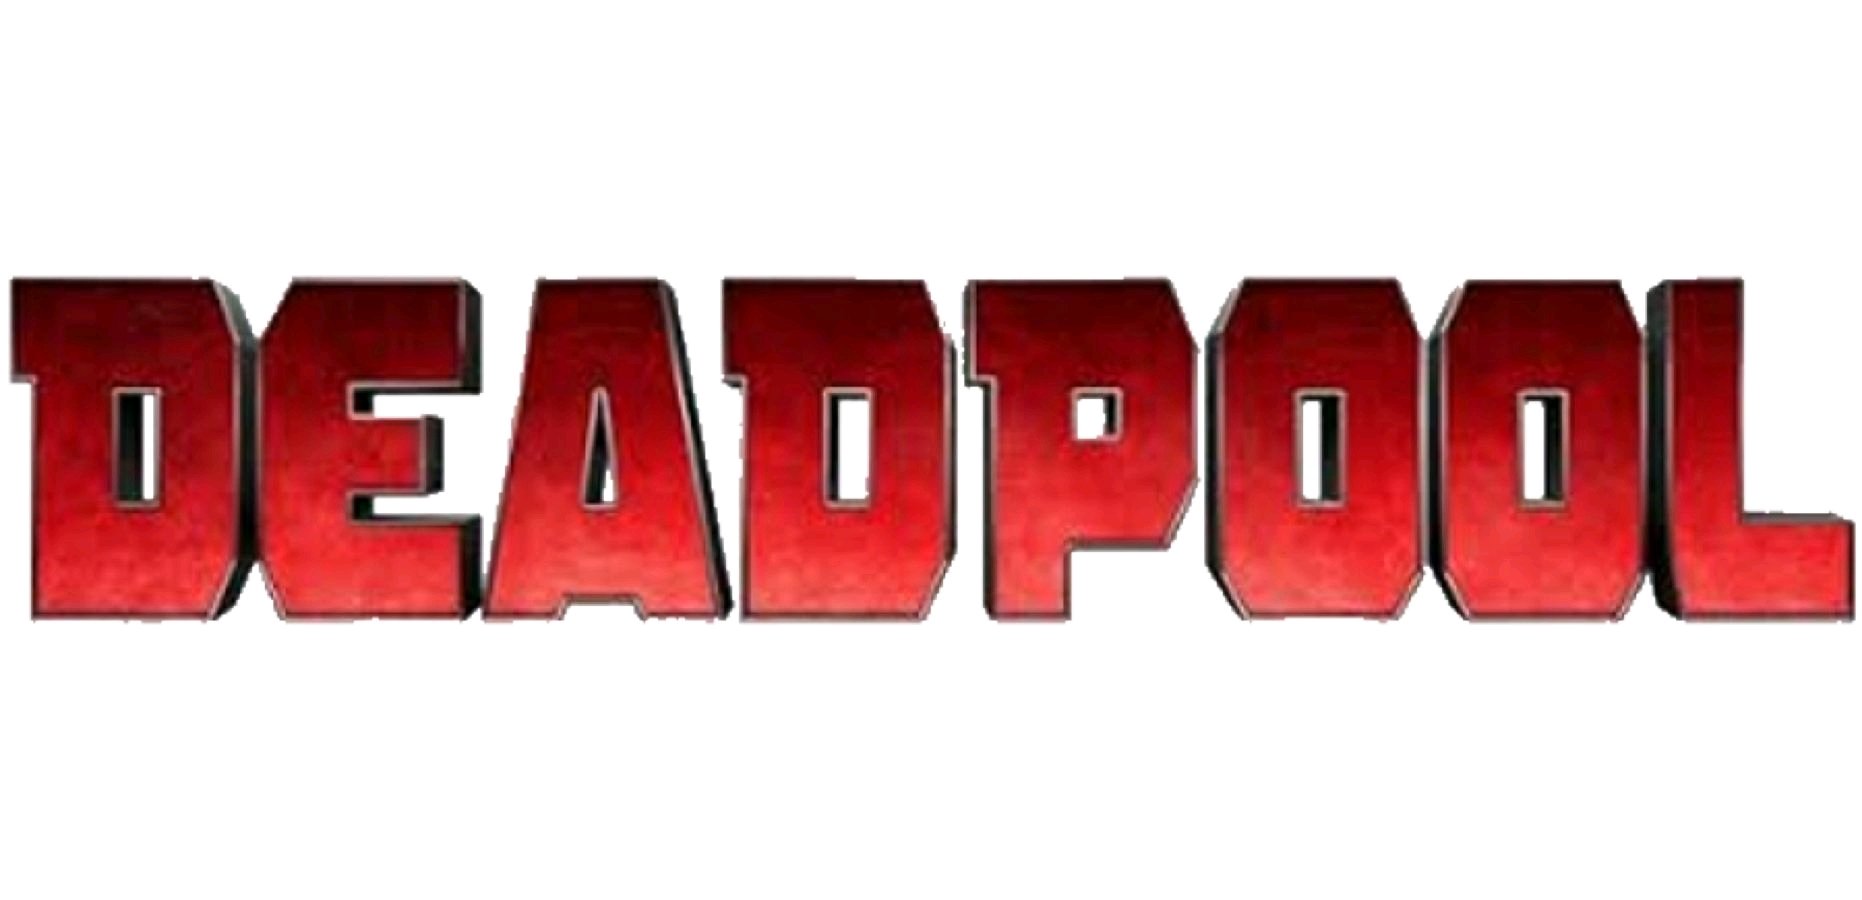 Deadpool - Juggernaut Cosbaby - Ozzie Collectables